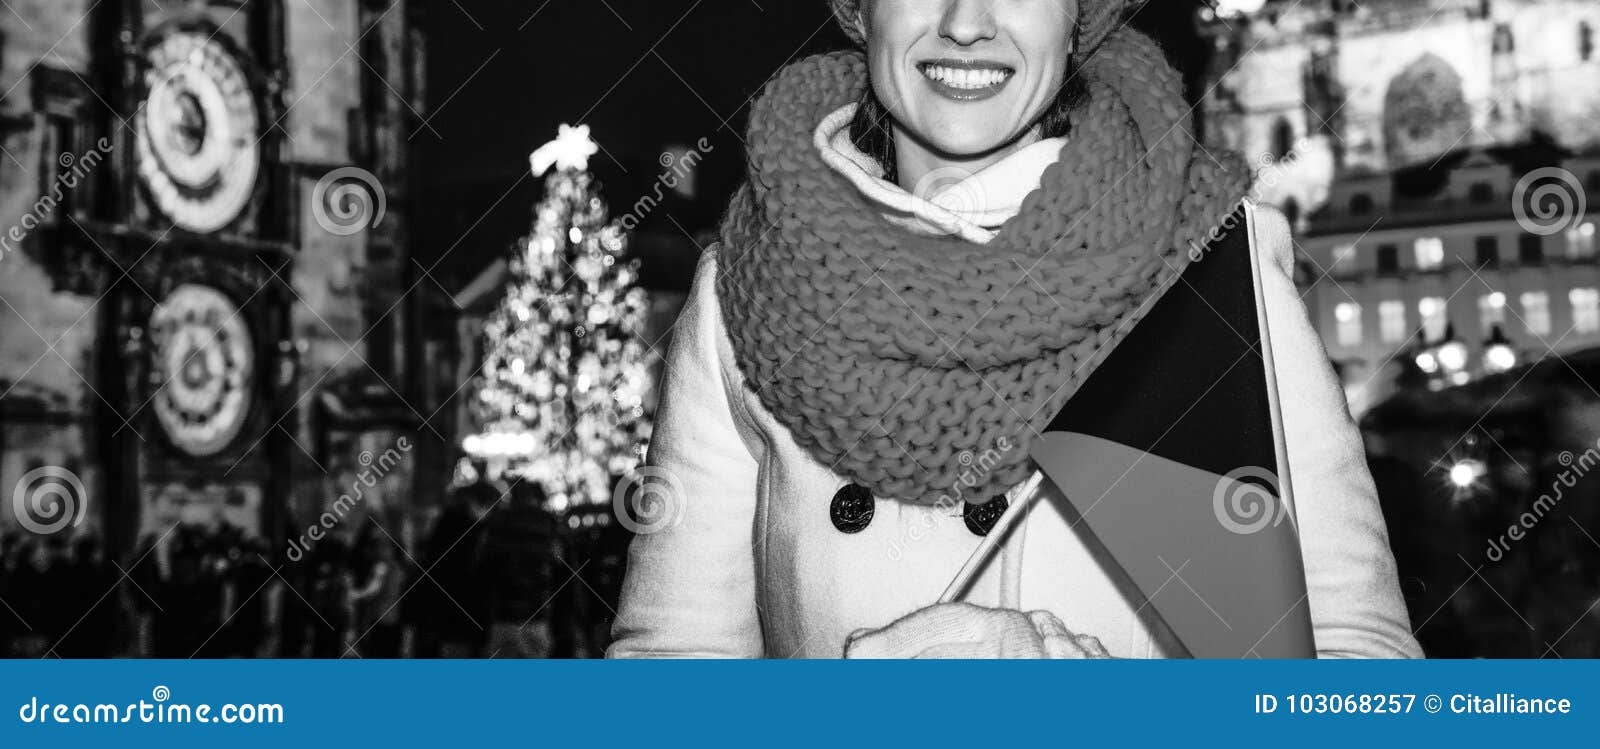 Woman At Christmas In Prague Czech Republic With Czech